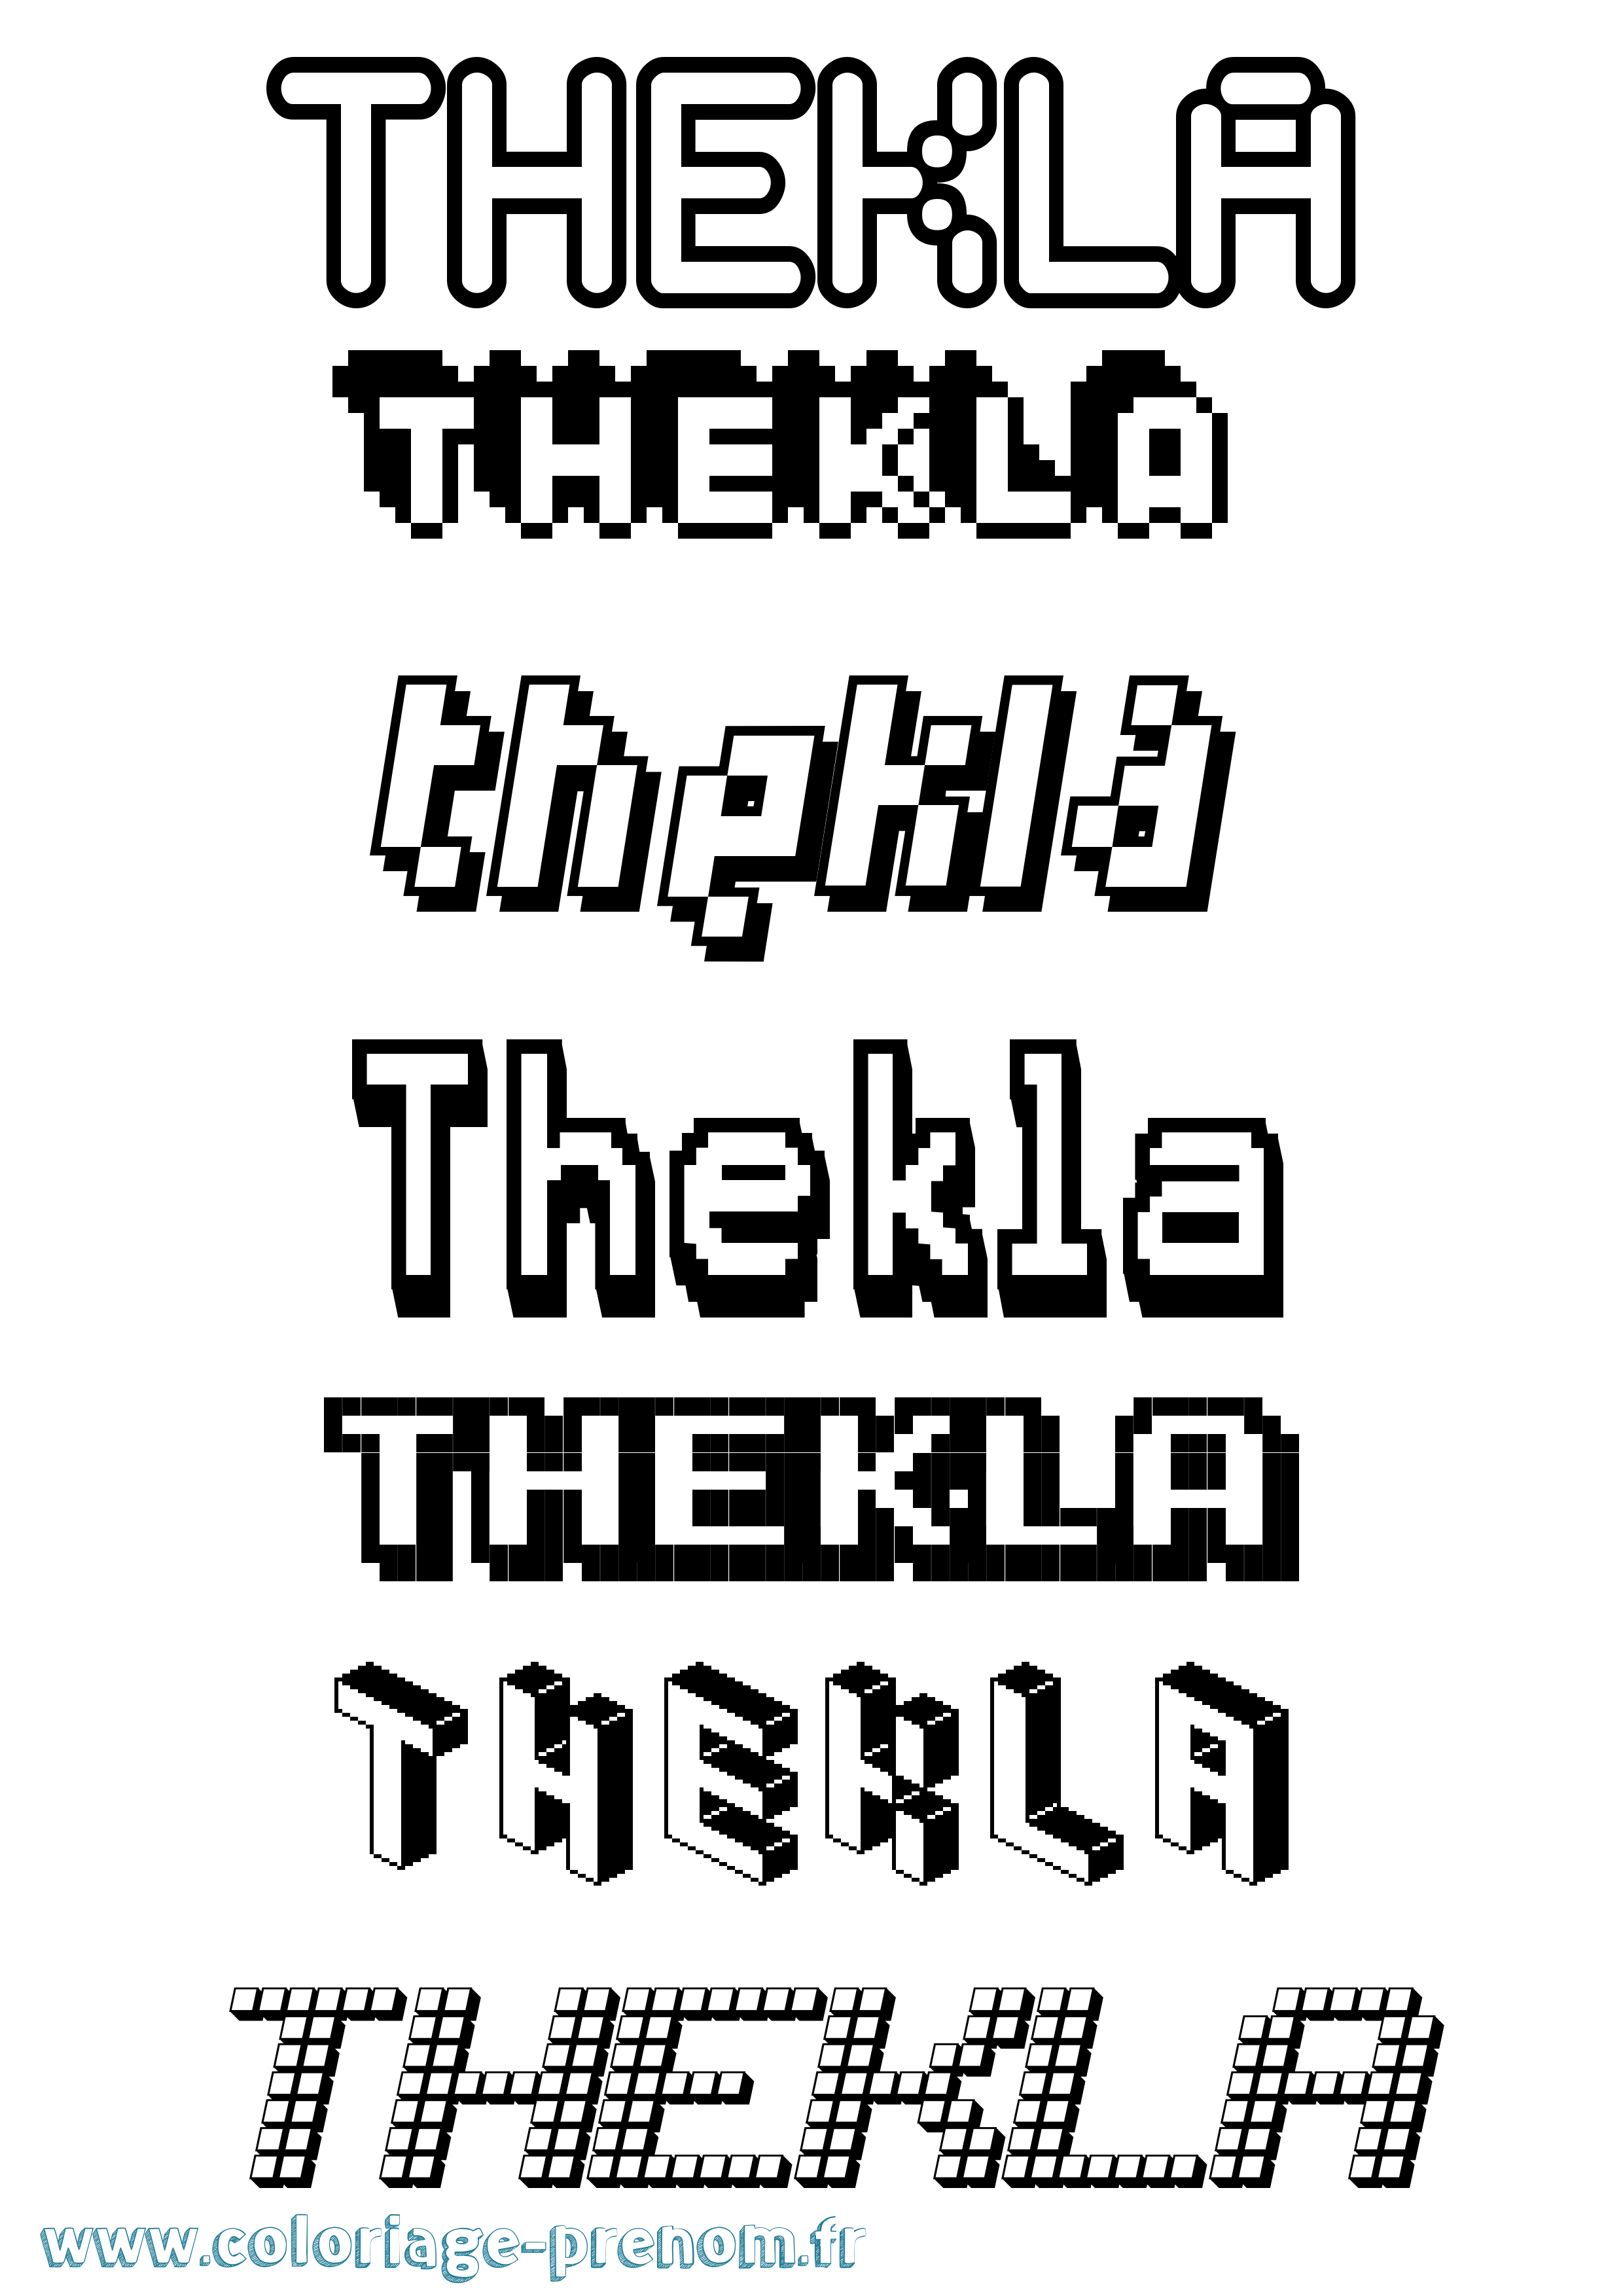 Coloriage prénom Thekla Pixel